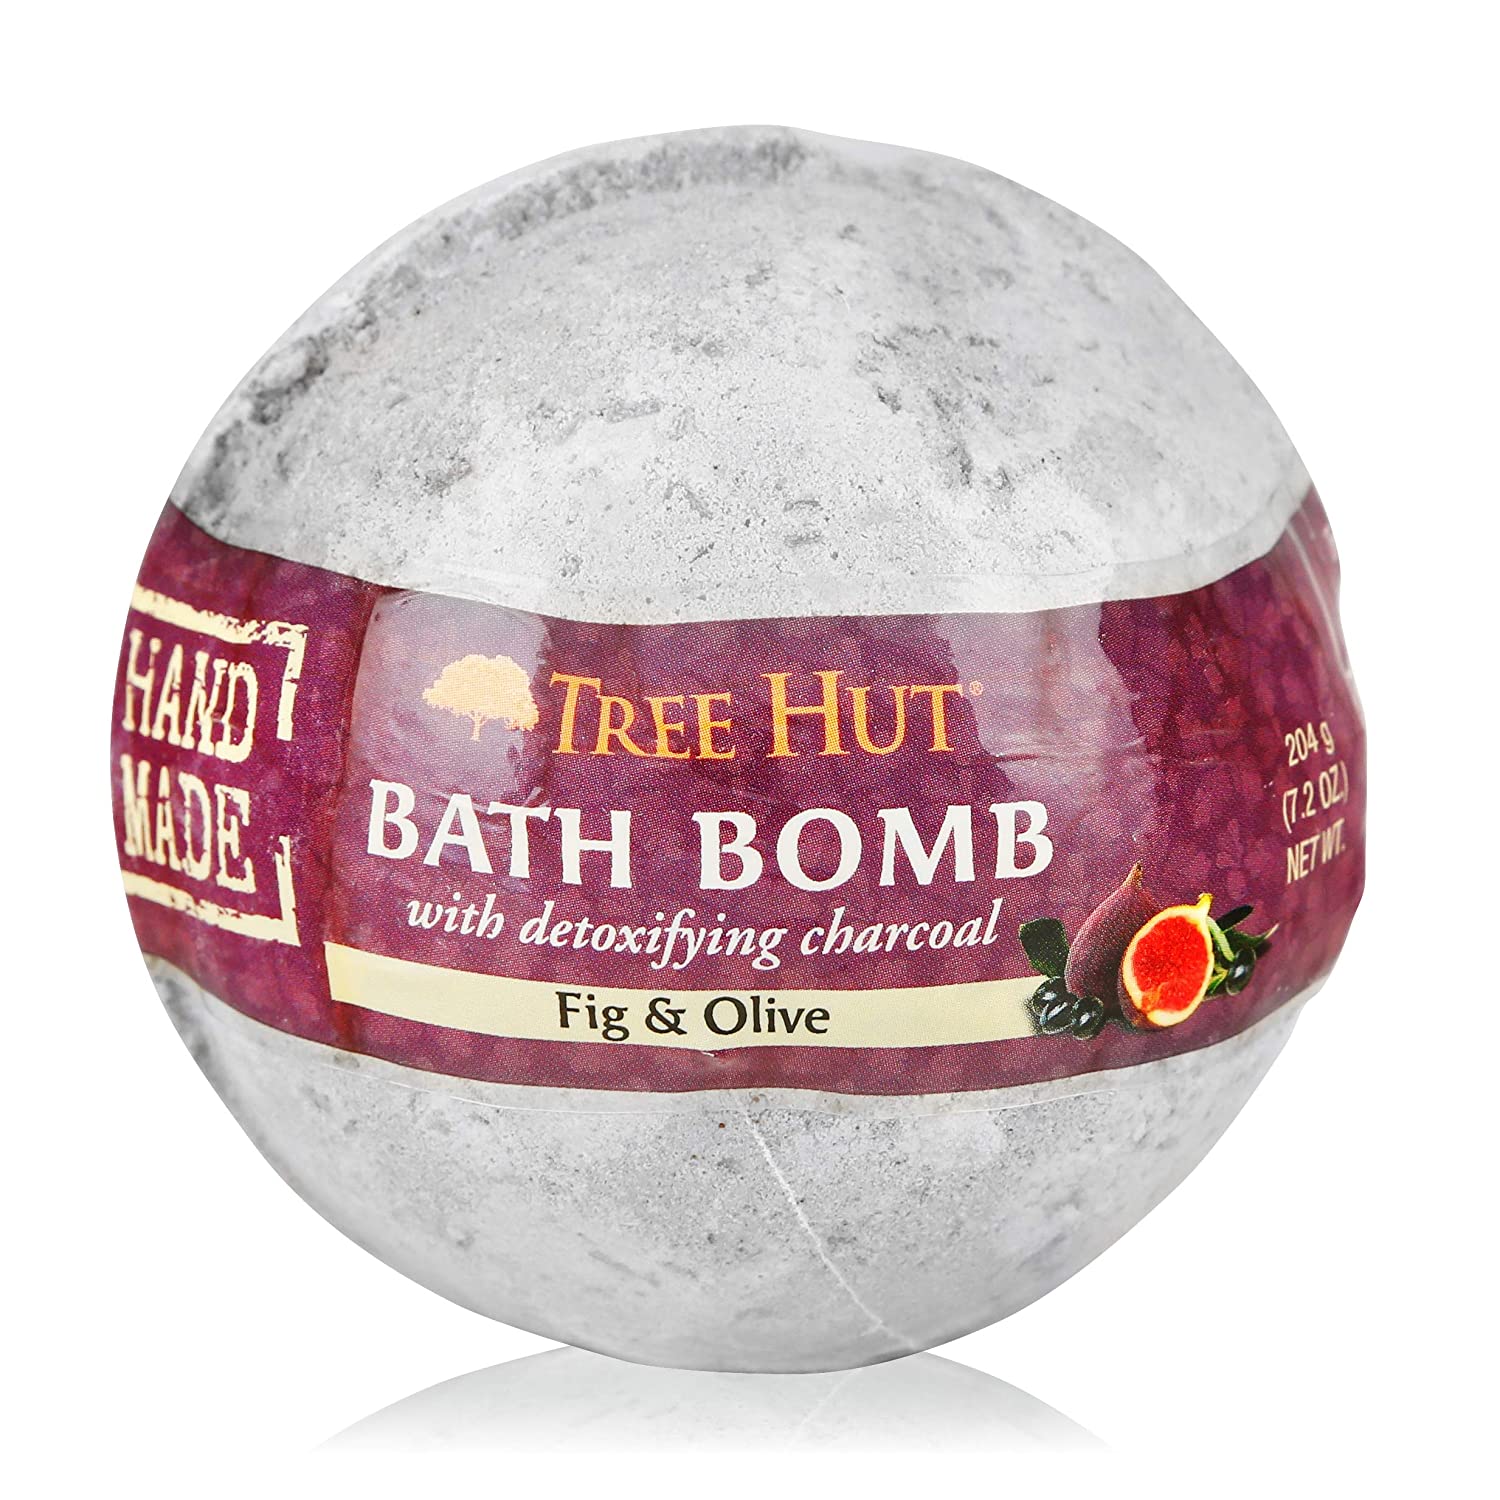 Tree Hut Bath Bomb Charcoal Fig & Olive